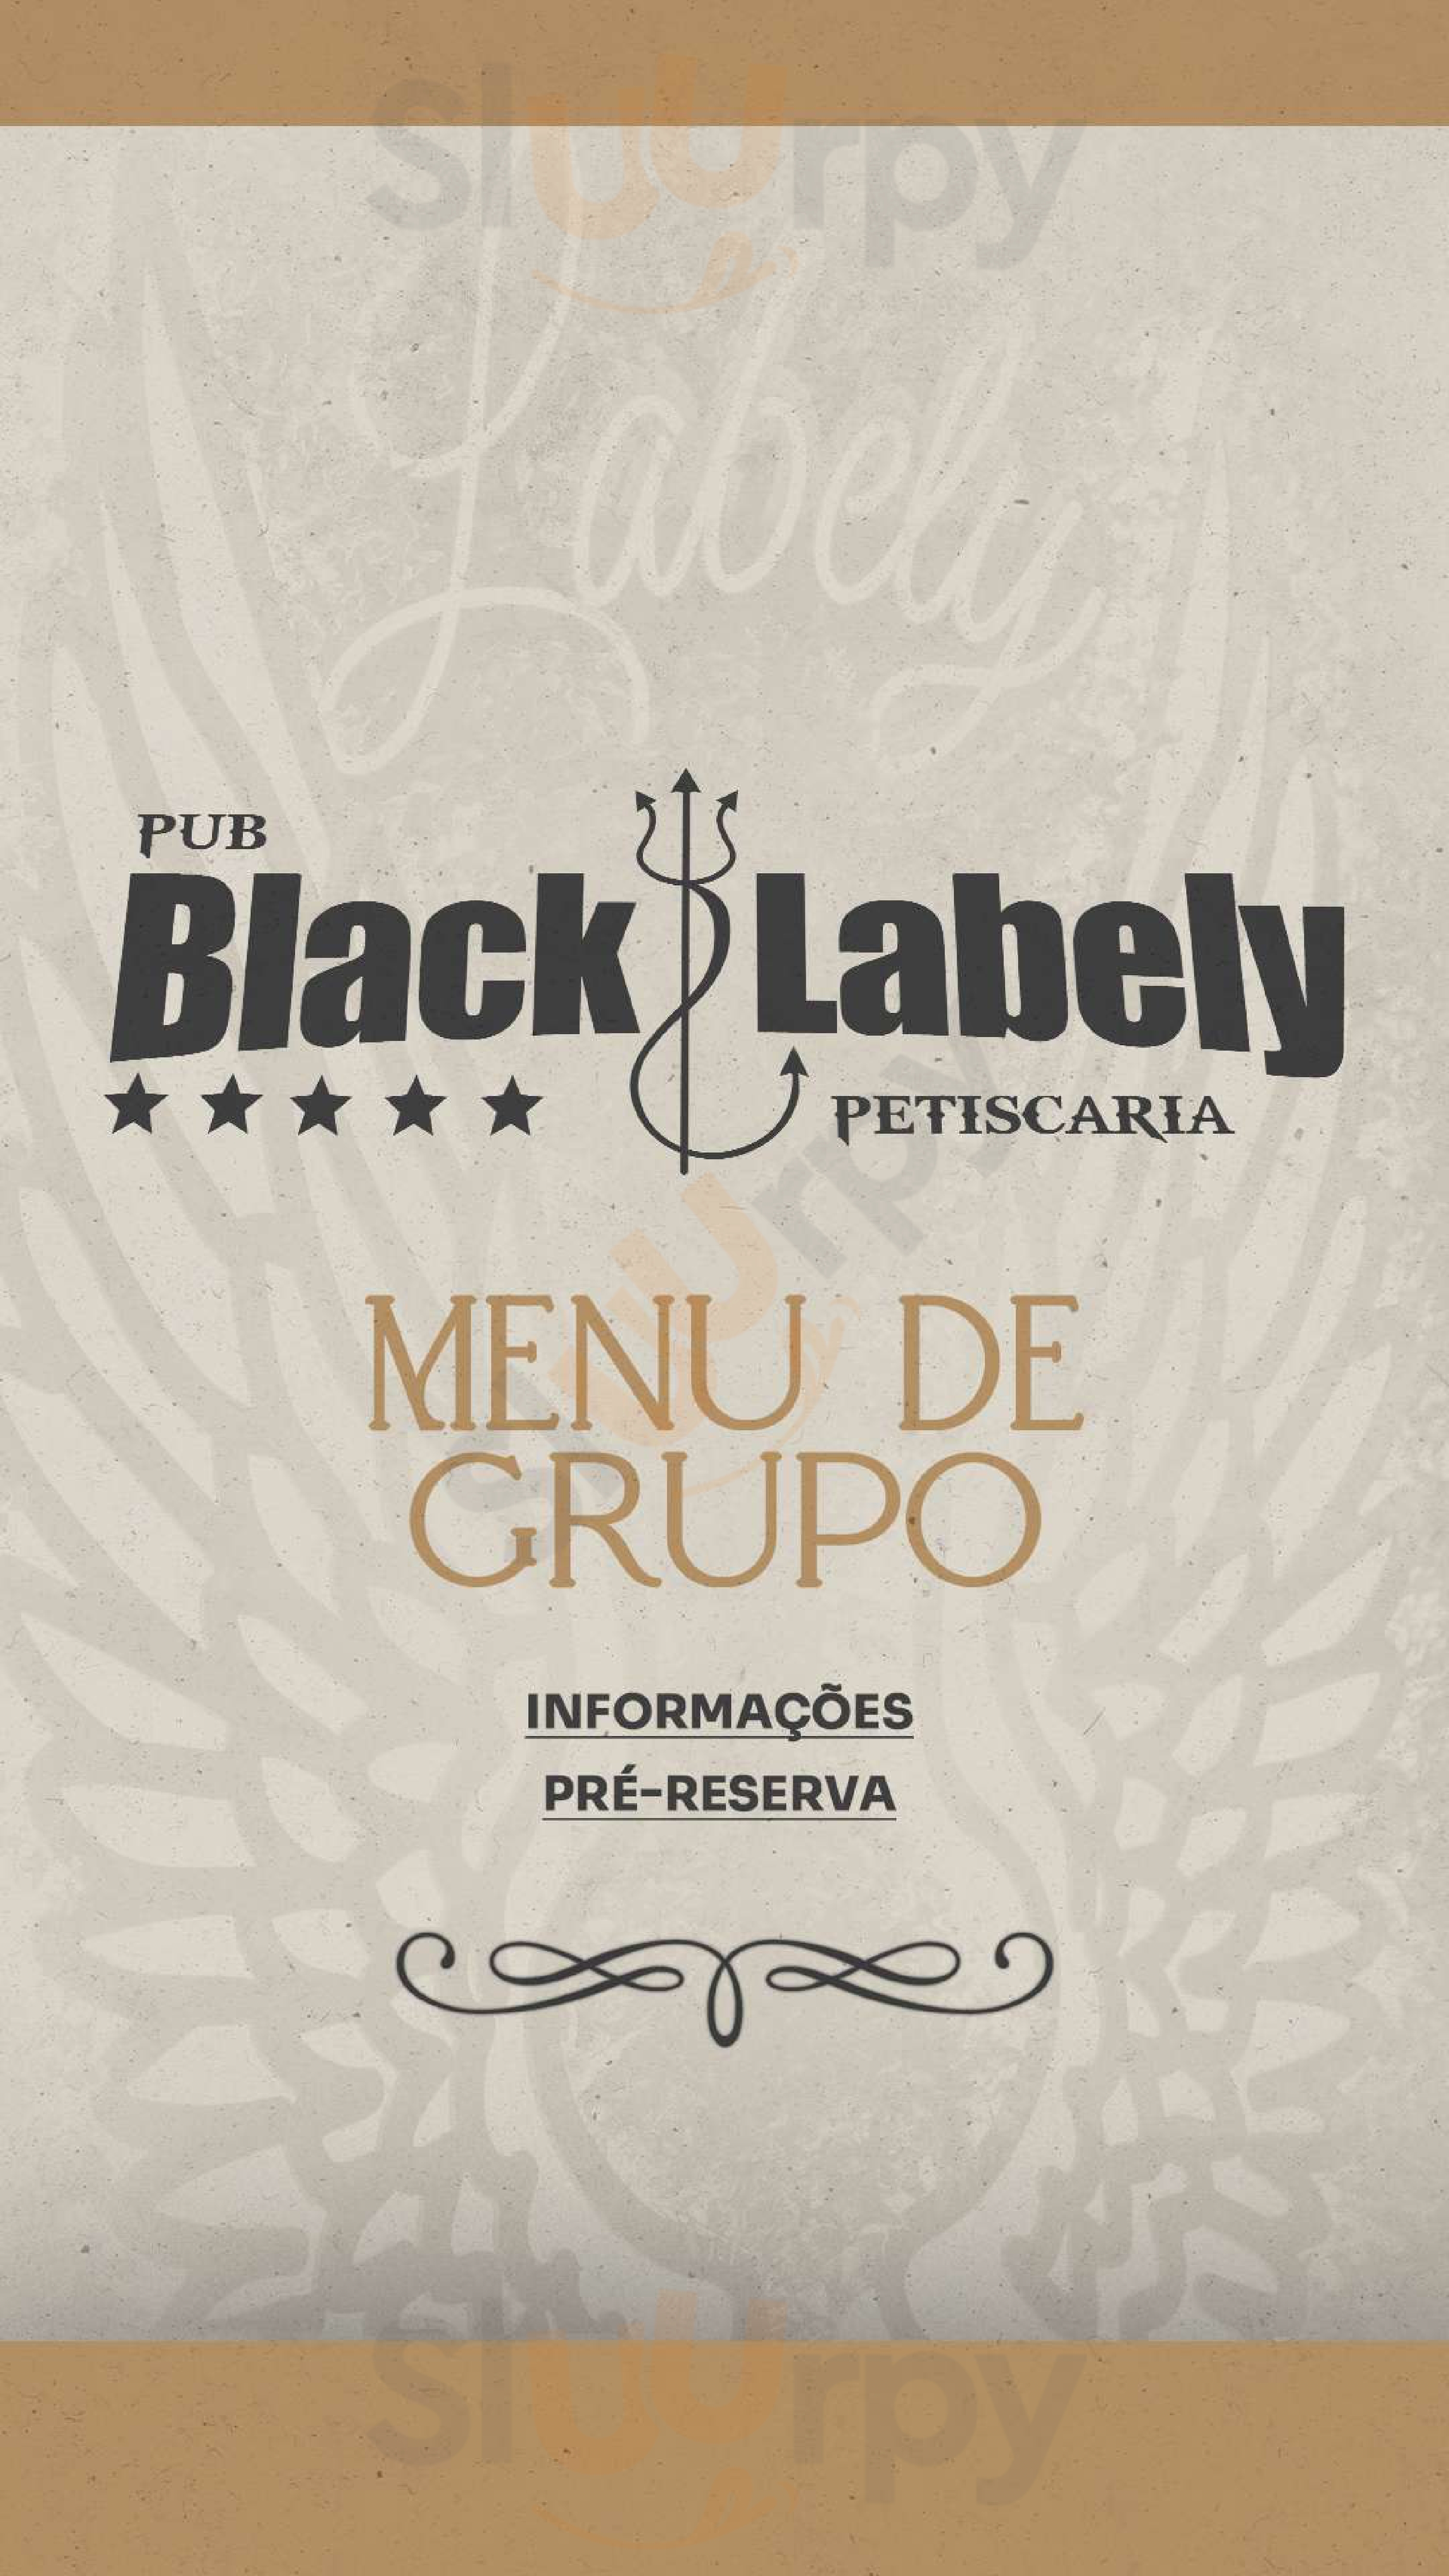 Black Labely Lisboa Menu - 1